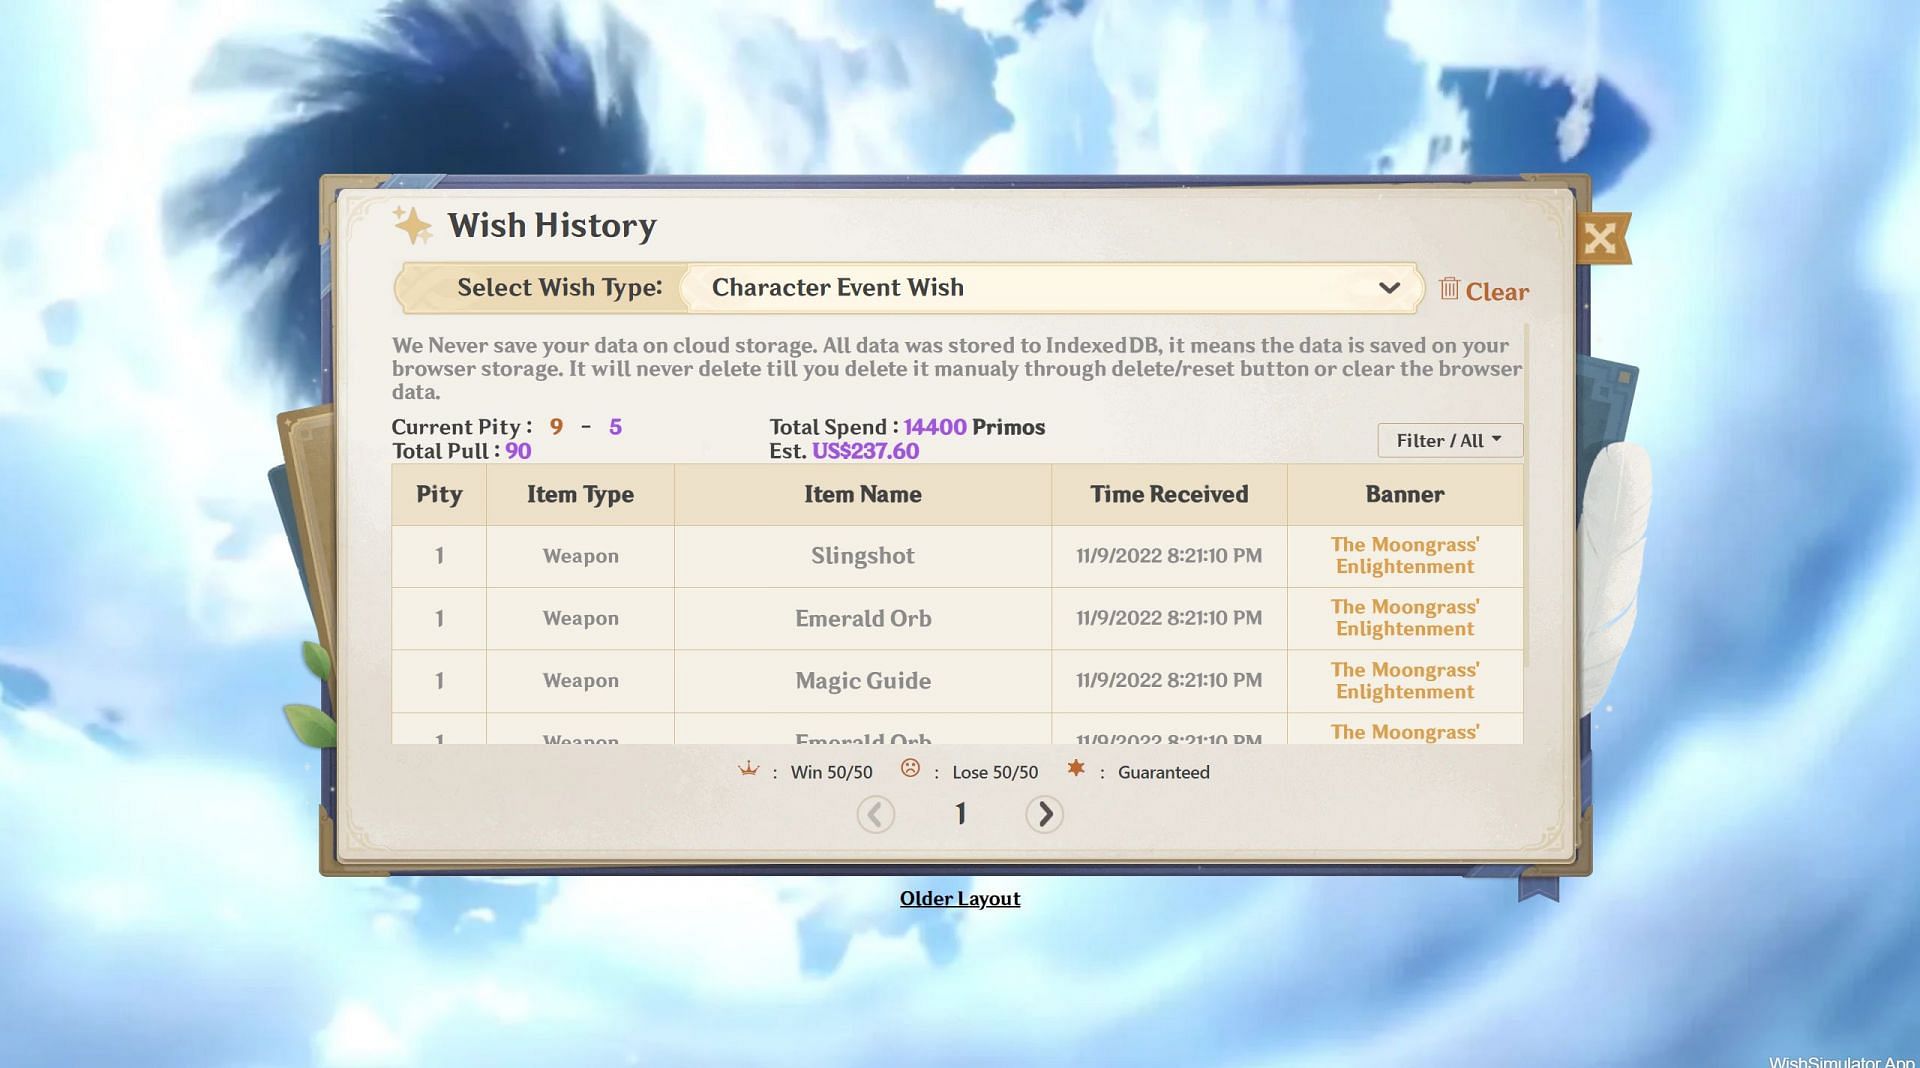 Wish history (Image via wishsimulator.app)